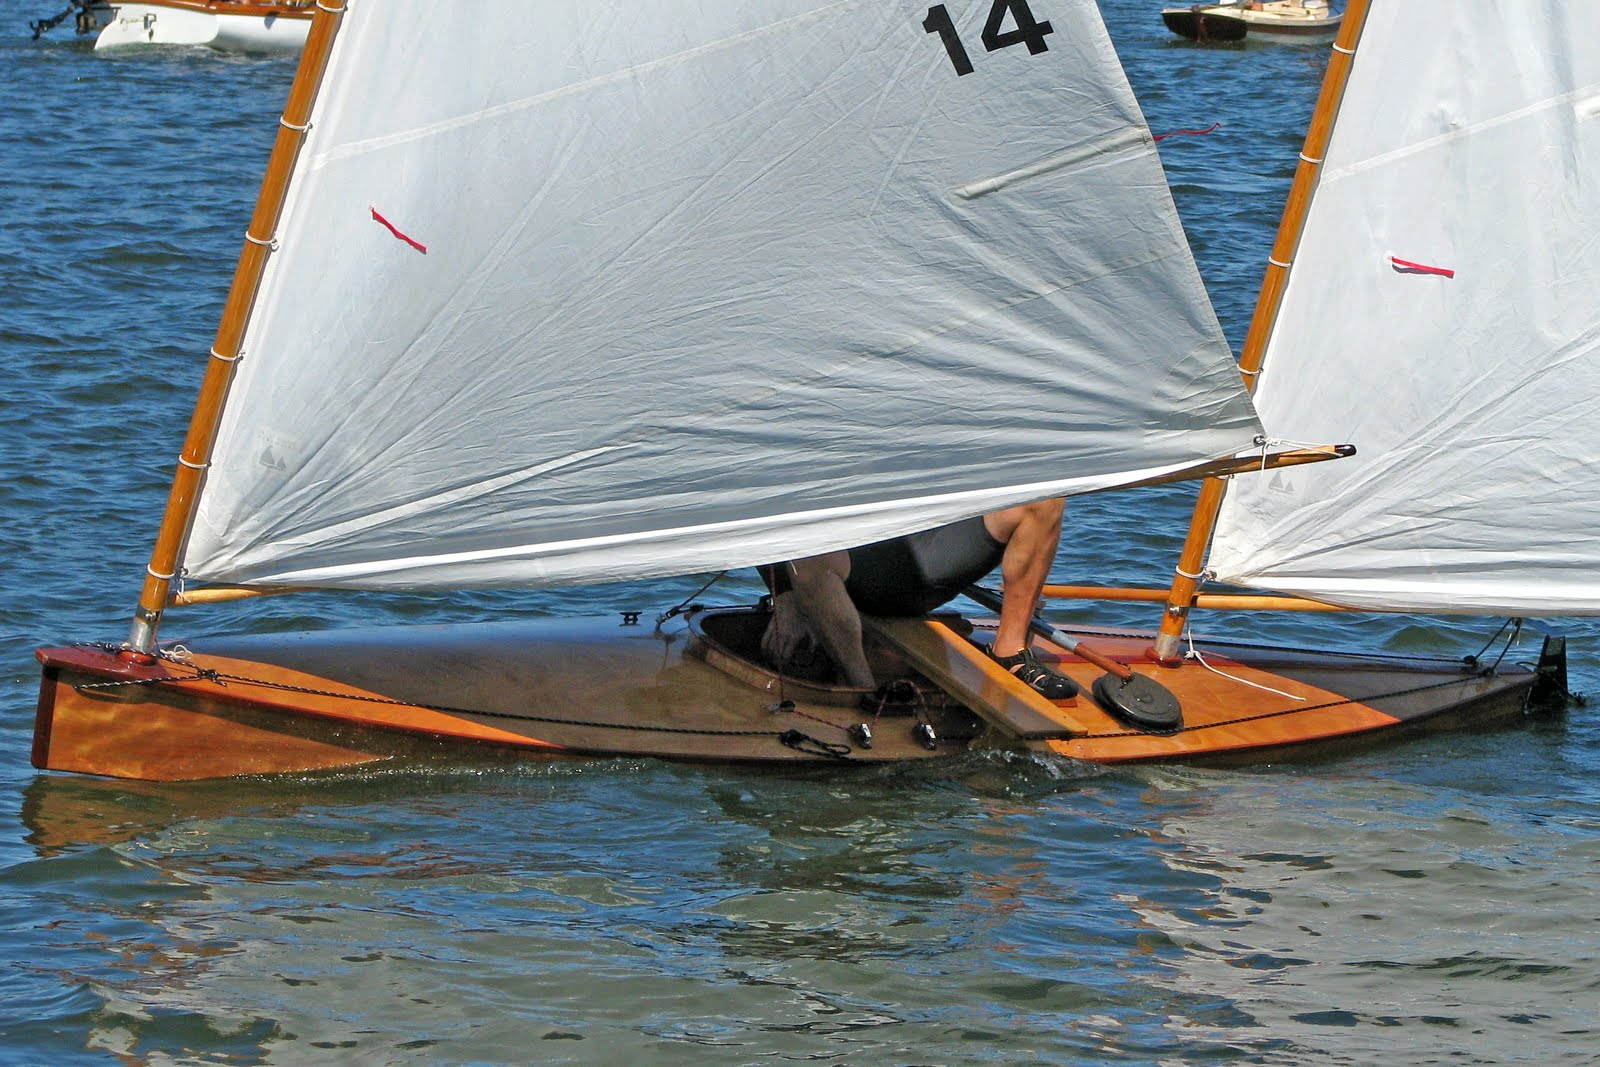  : 2010 Mid Atlantic Small Craft Festival; 16X30 Sailing Canoe